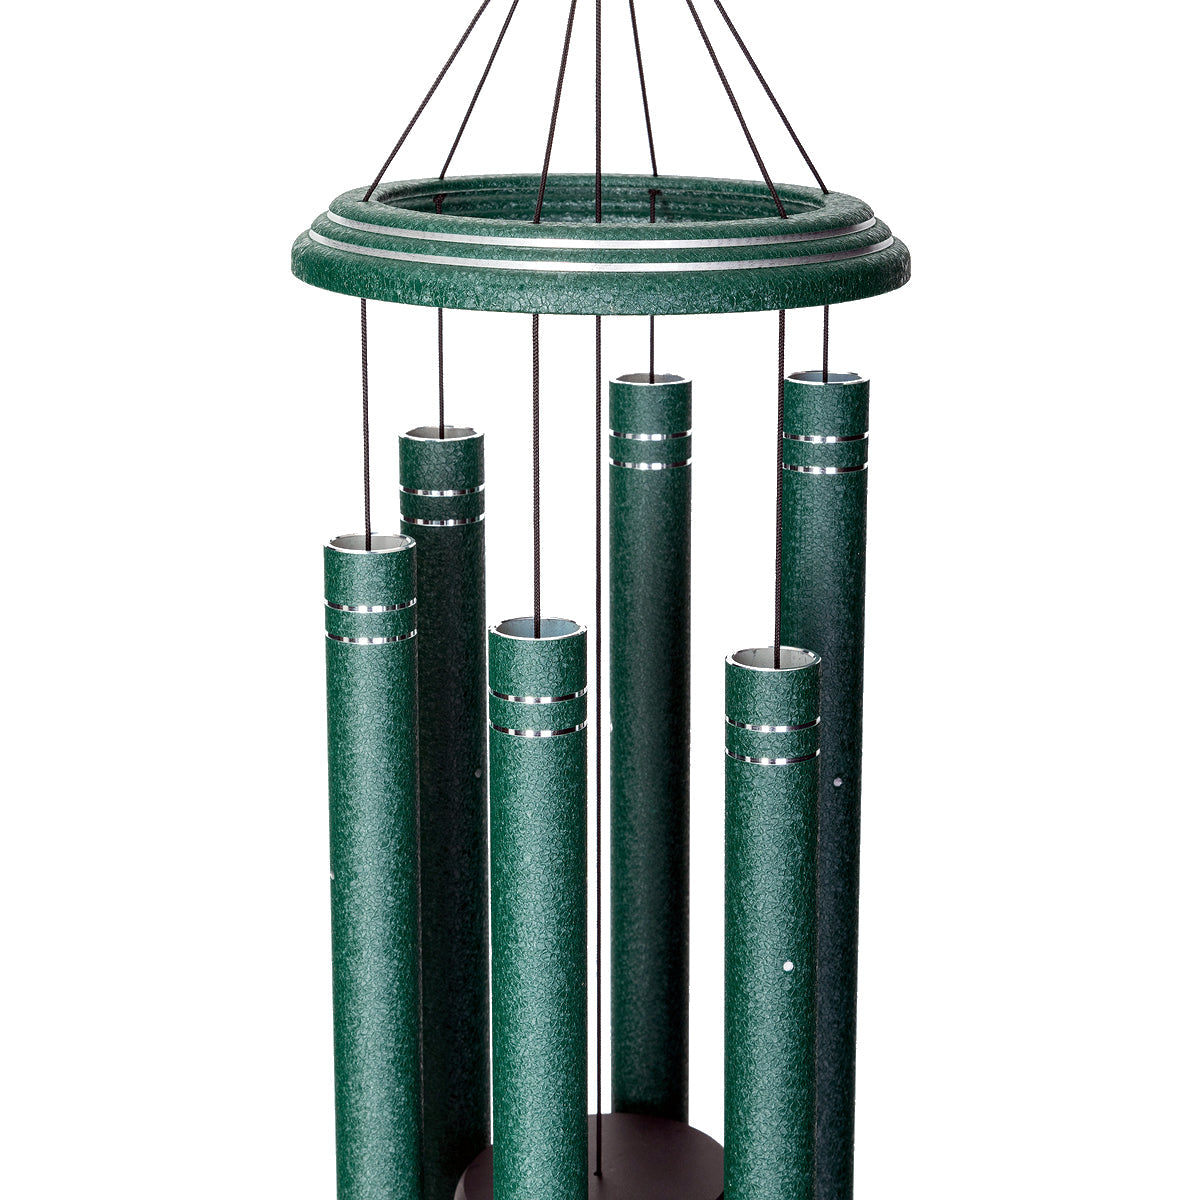 Arabesque 44-inch Wind Chime - Emerald